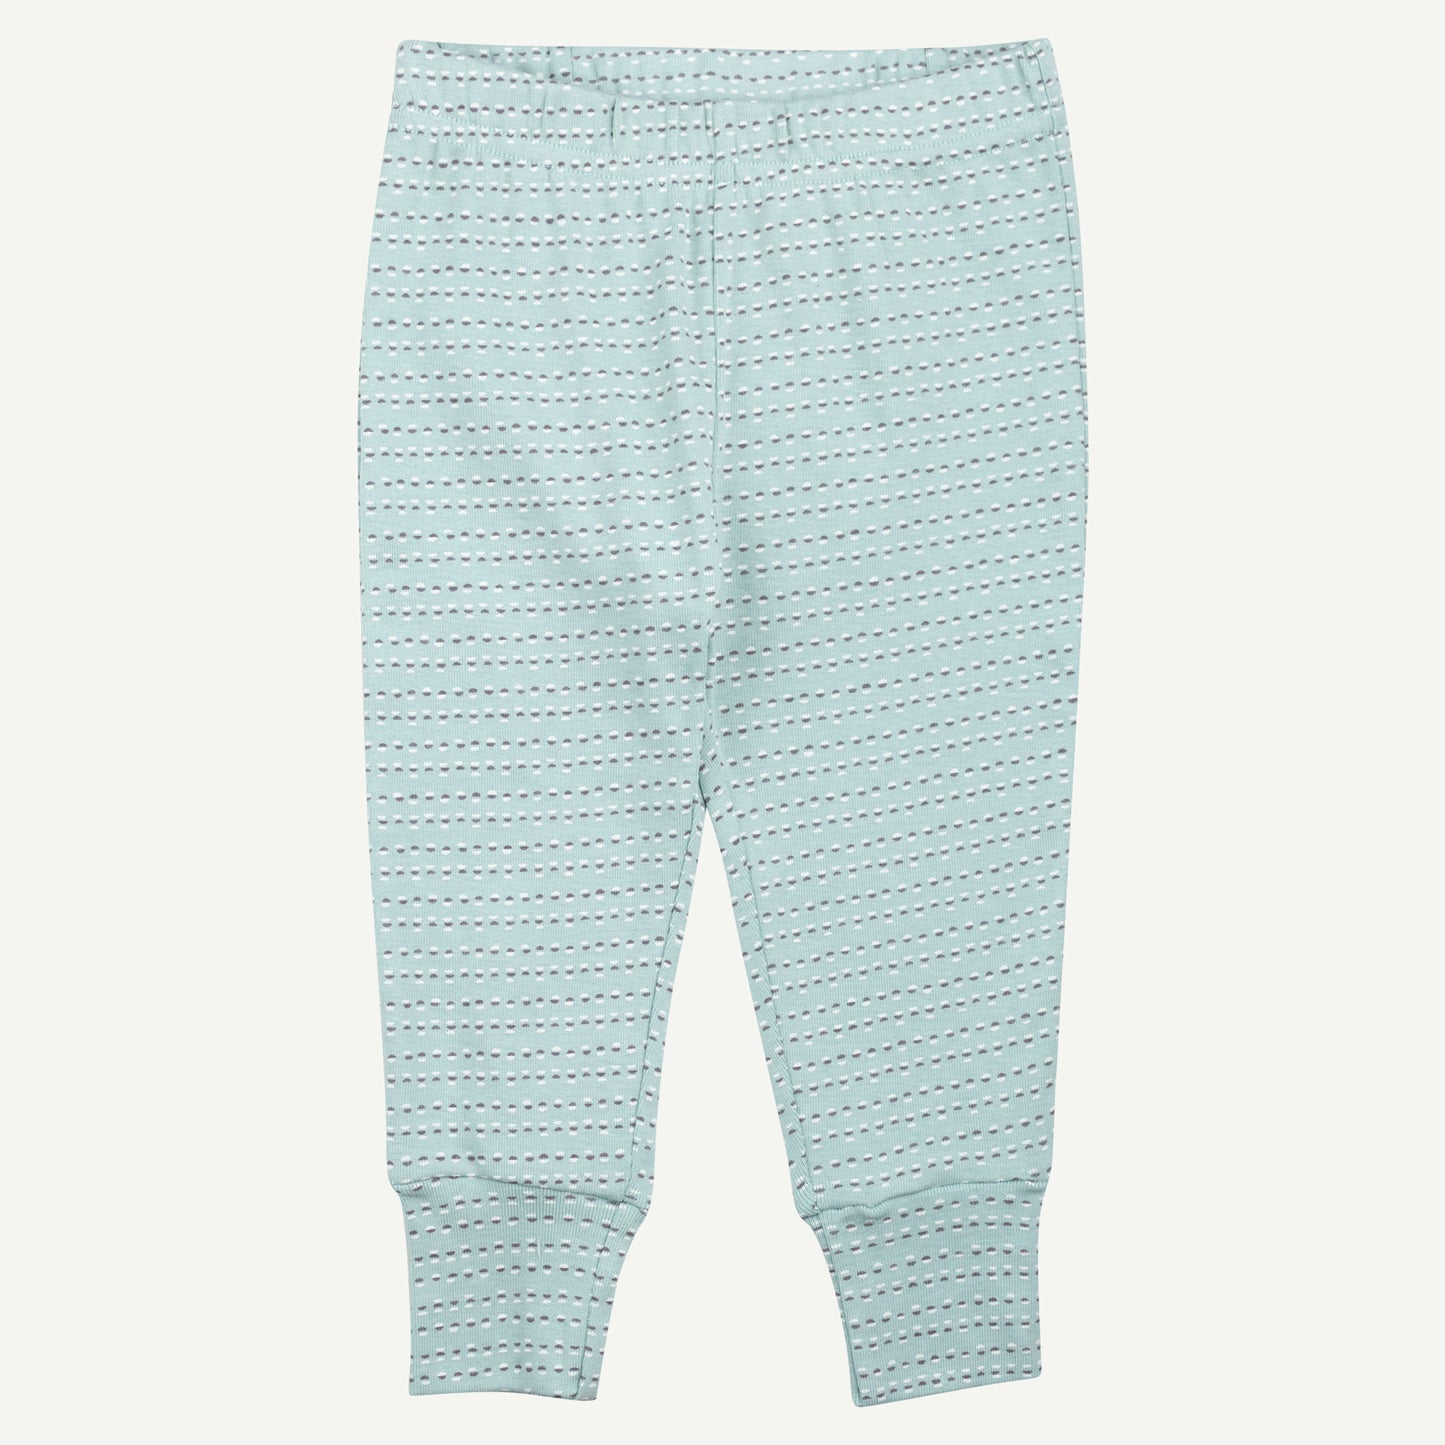 2-Pack Pajama in Light Blue Geo Print